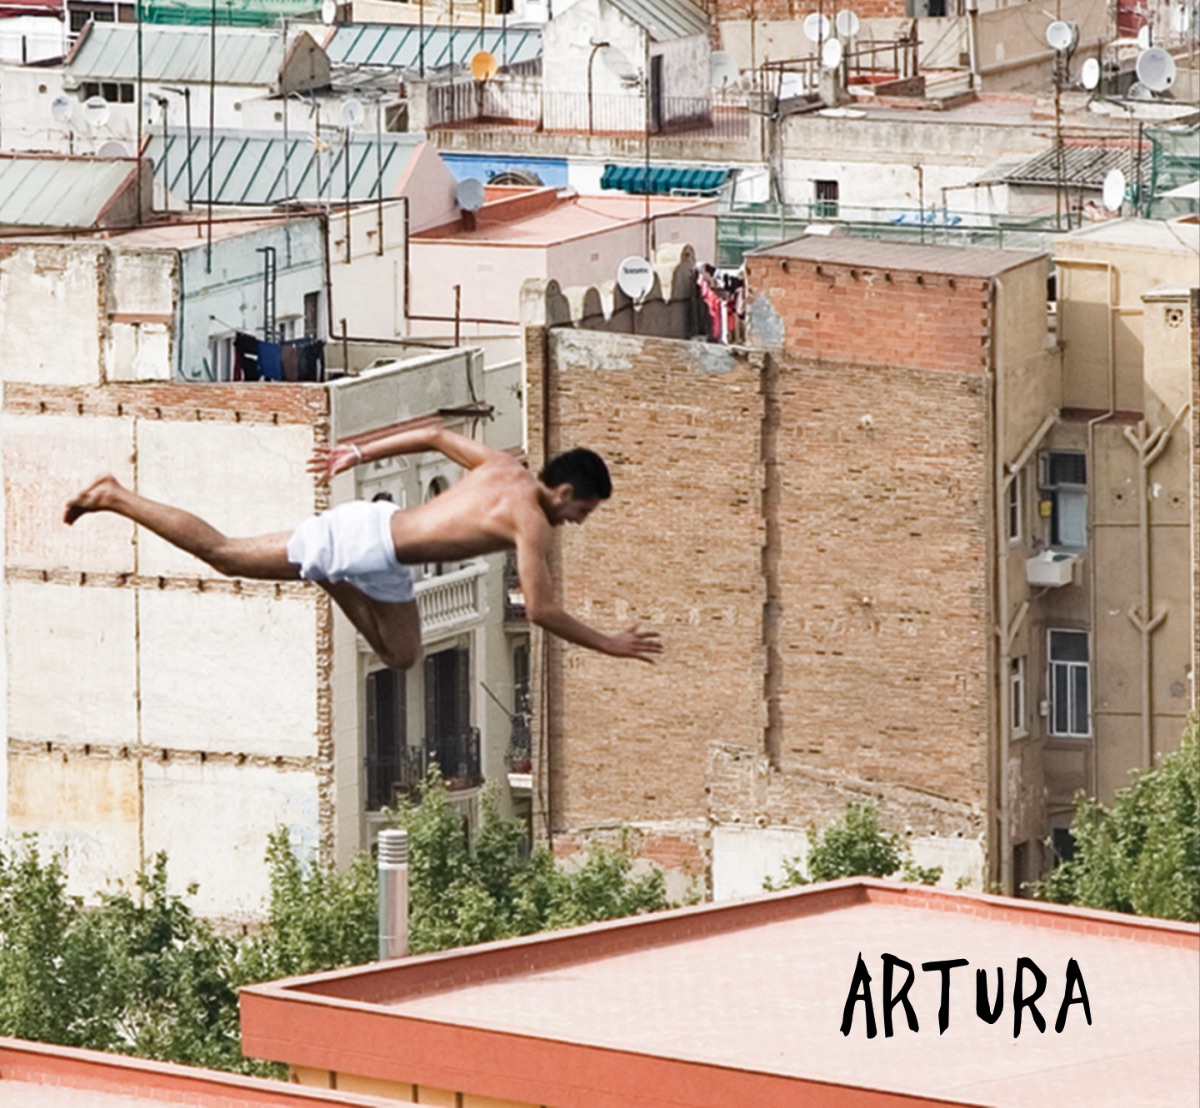 Artura – “Some people falling”